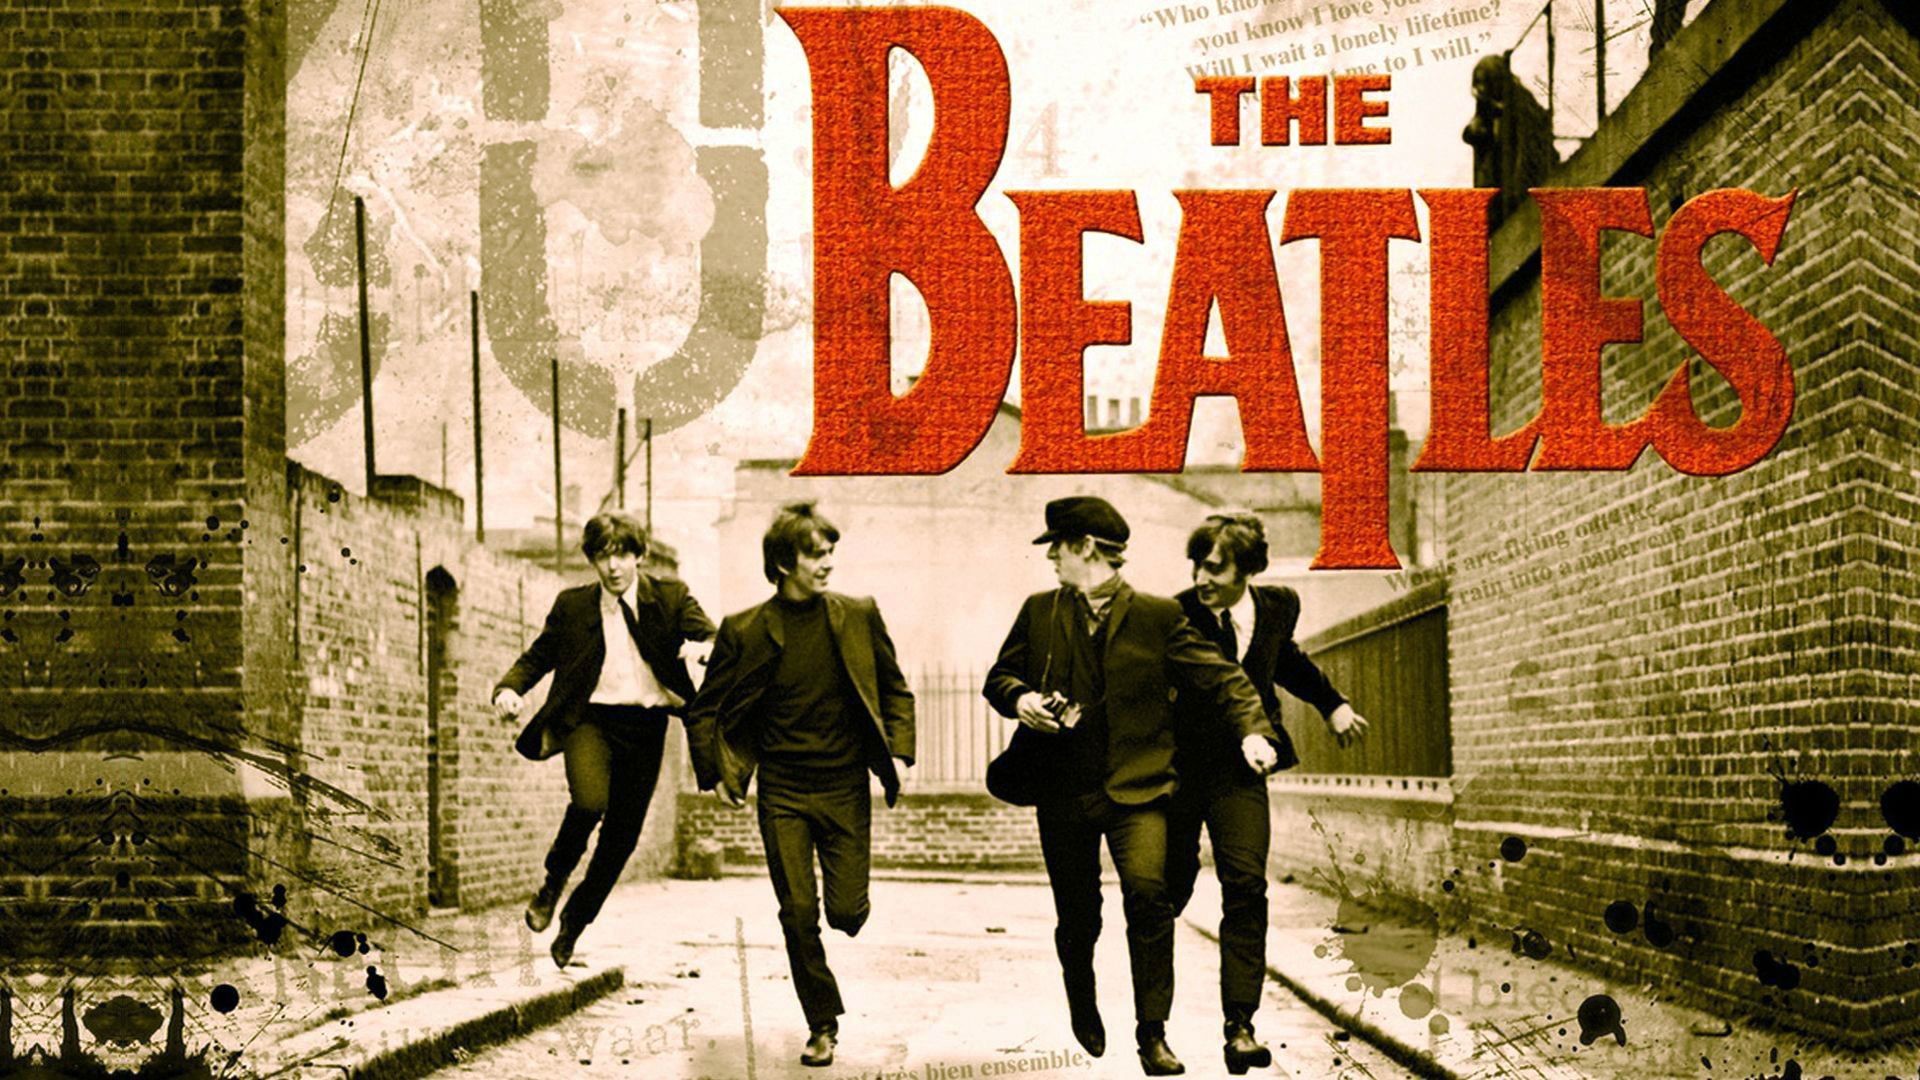 1920x1080 The Beatles Abbey Road Album Cover